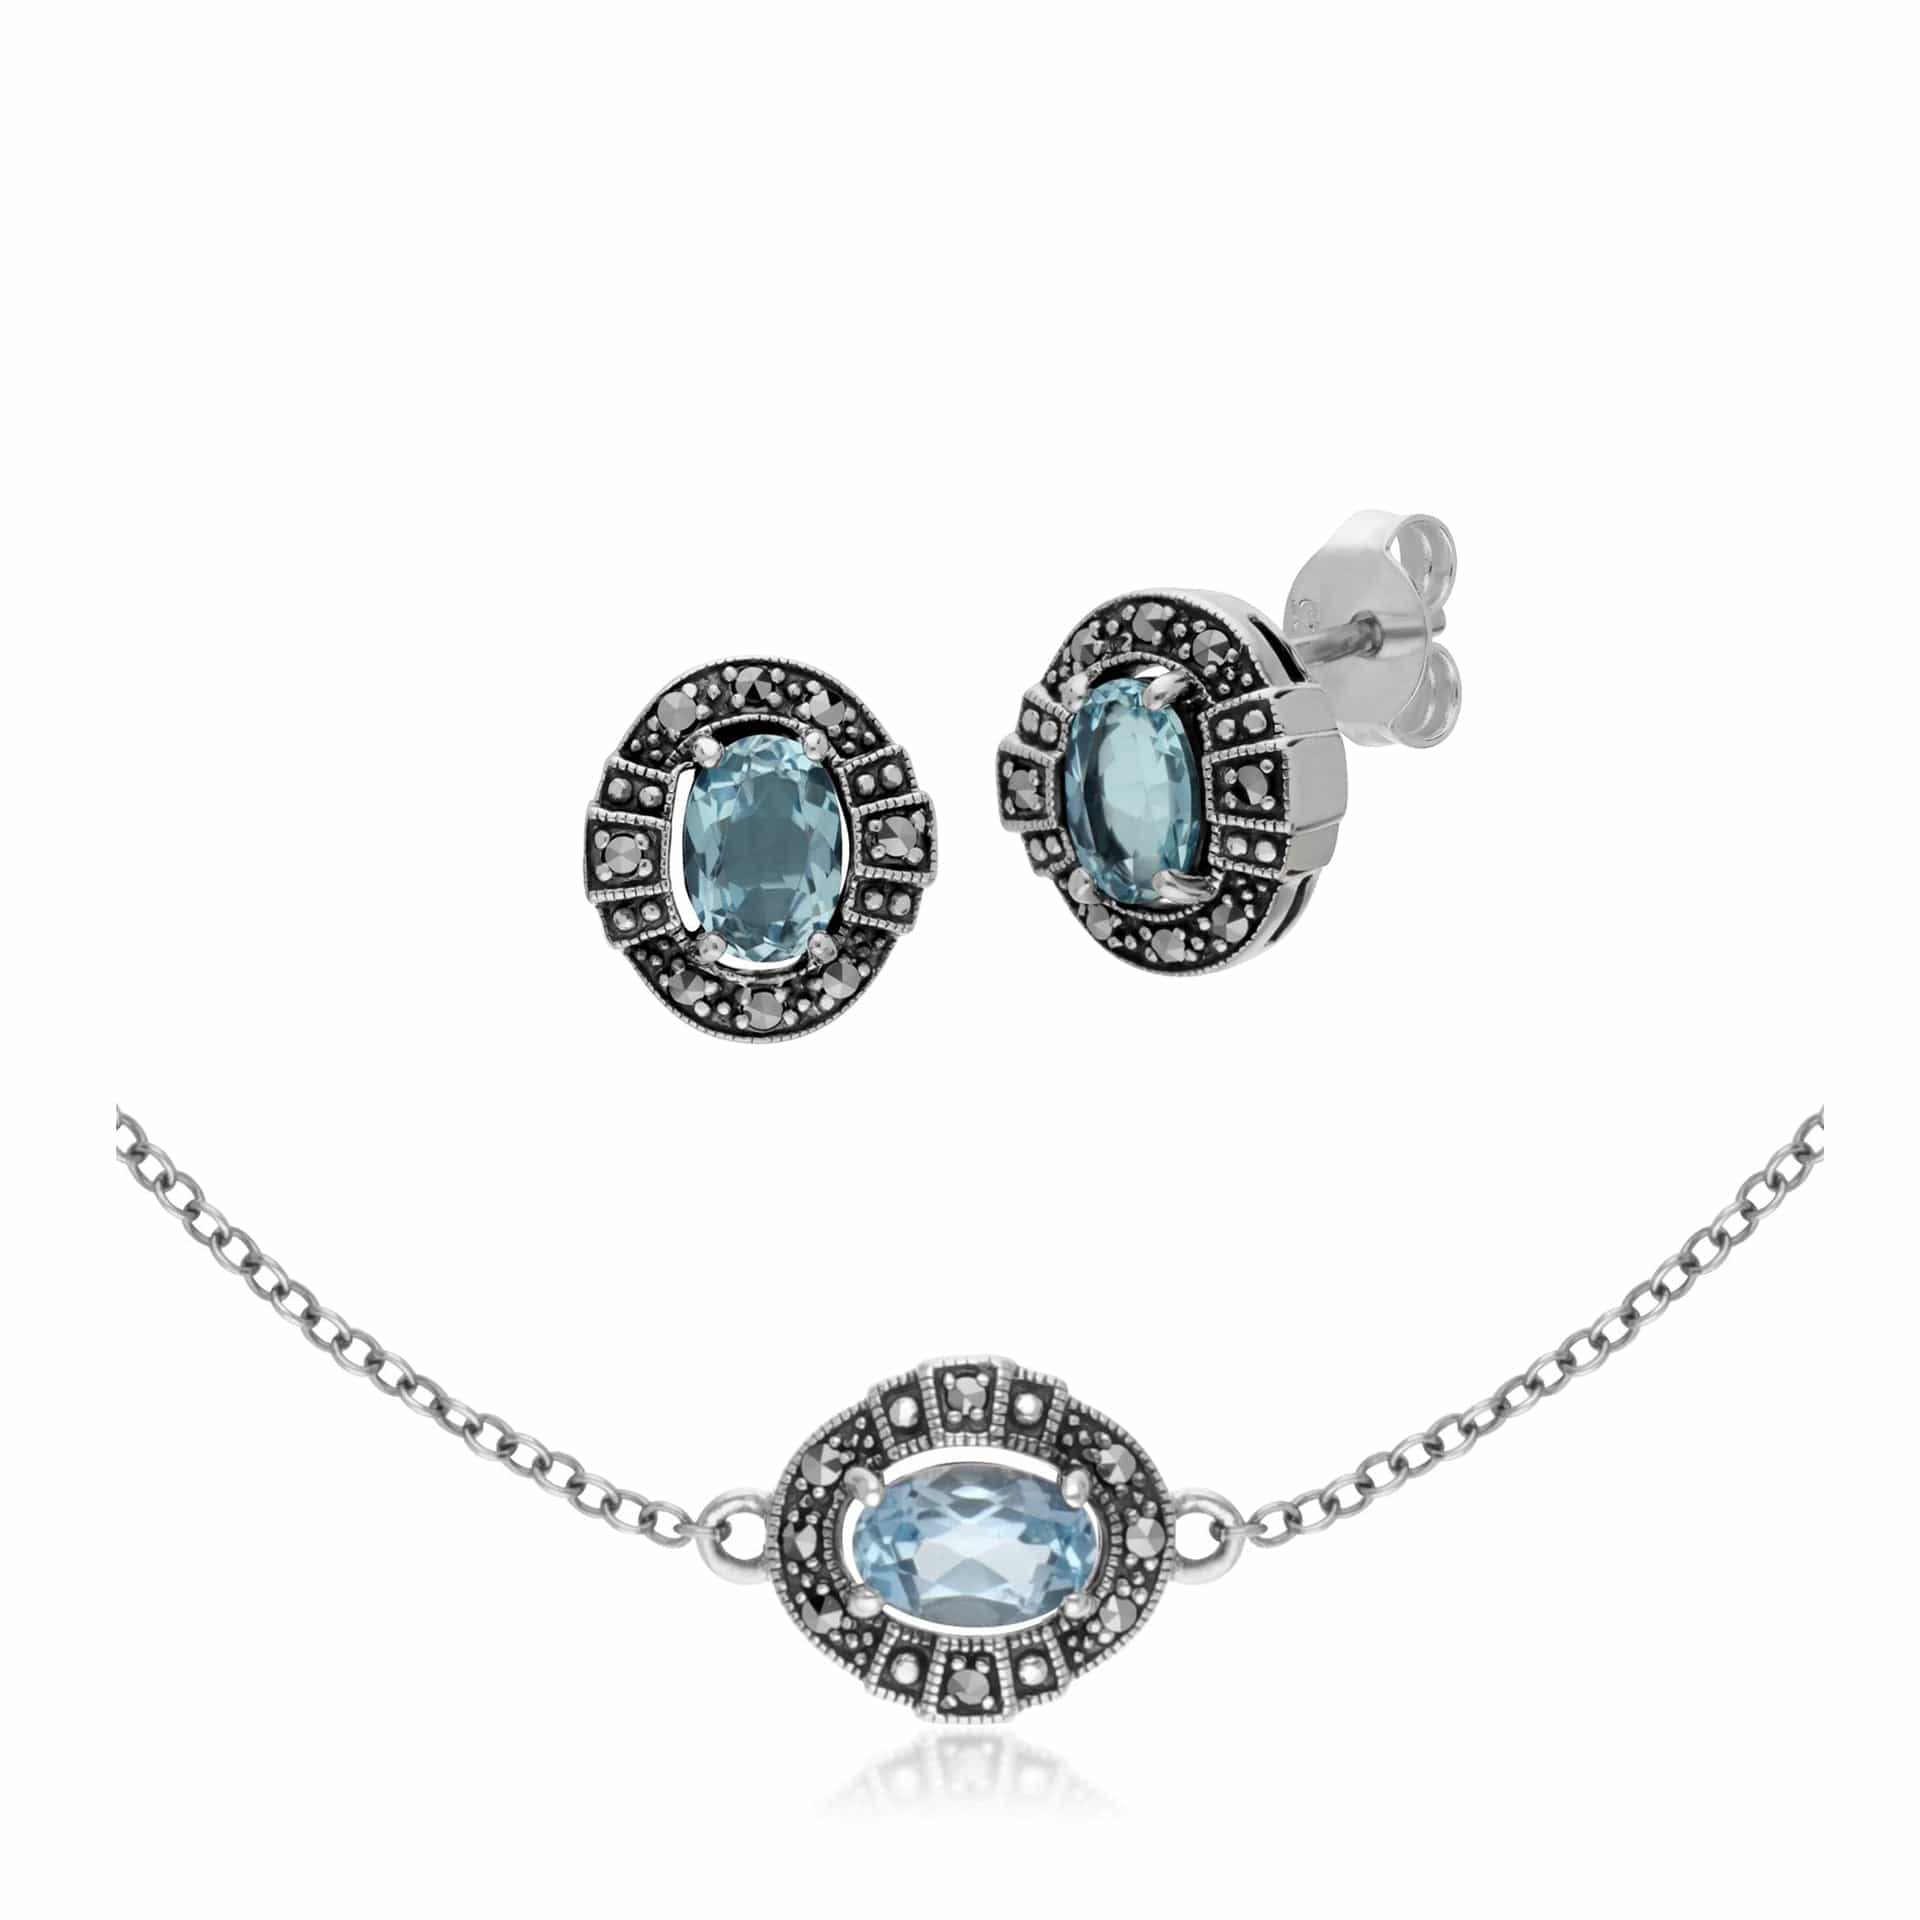 214E873001925-214L165401925 Art Deco Style Oval Blue Topaz and Marcasite Cluster Stud Earrings & Bracelet Set in 925 Sterling Silver 1